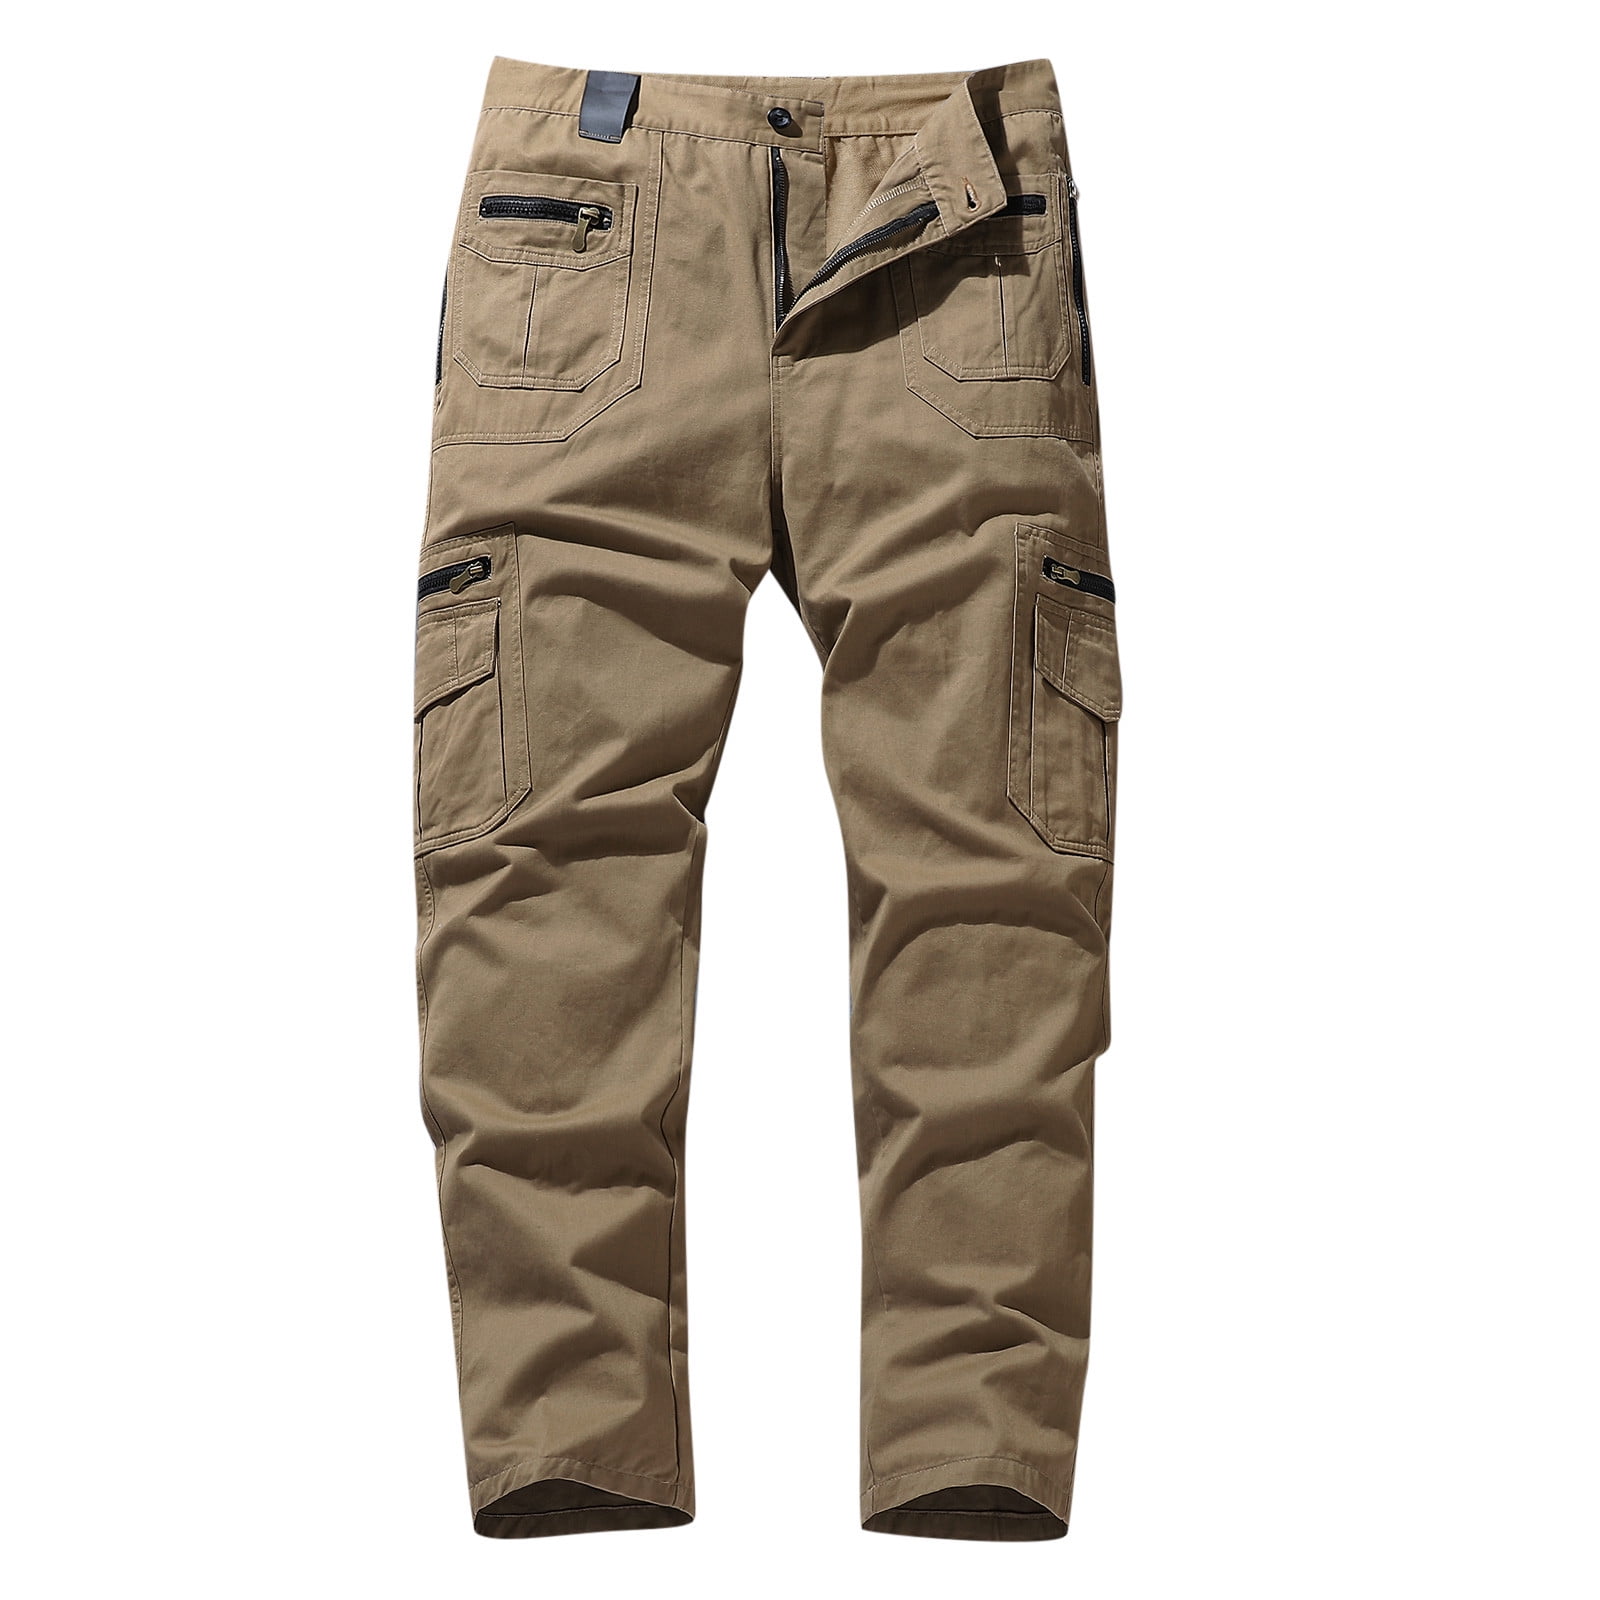 Men Cargo Pants Clearance,TIANEK Fashion Multi-Pocket Bermuda